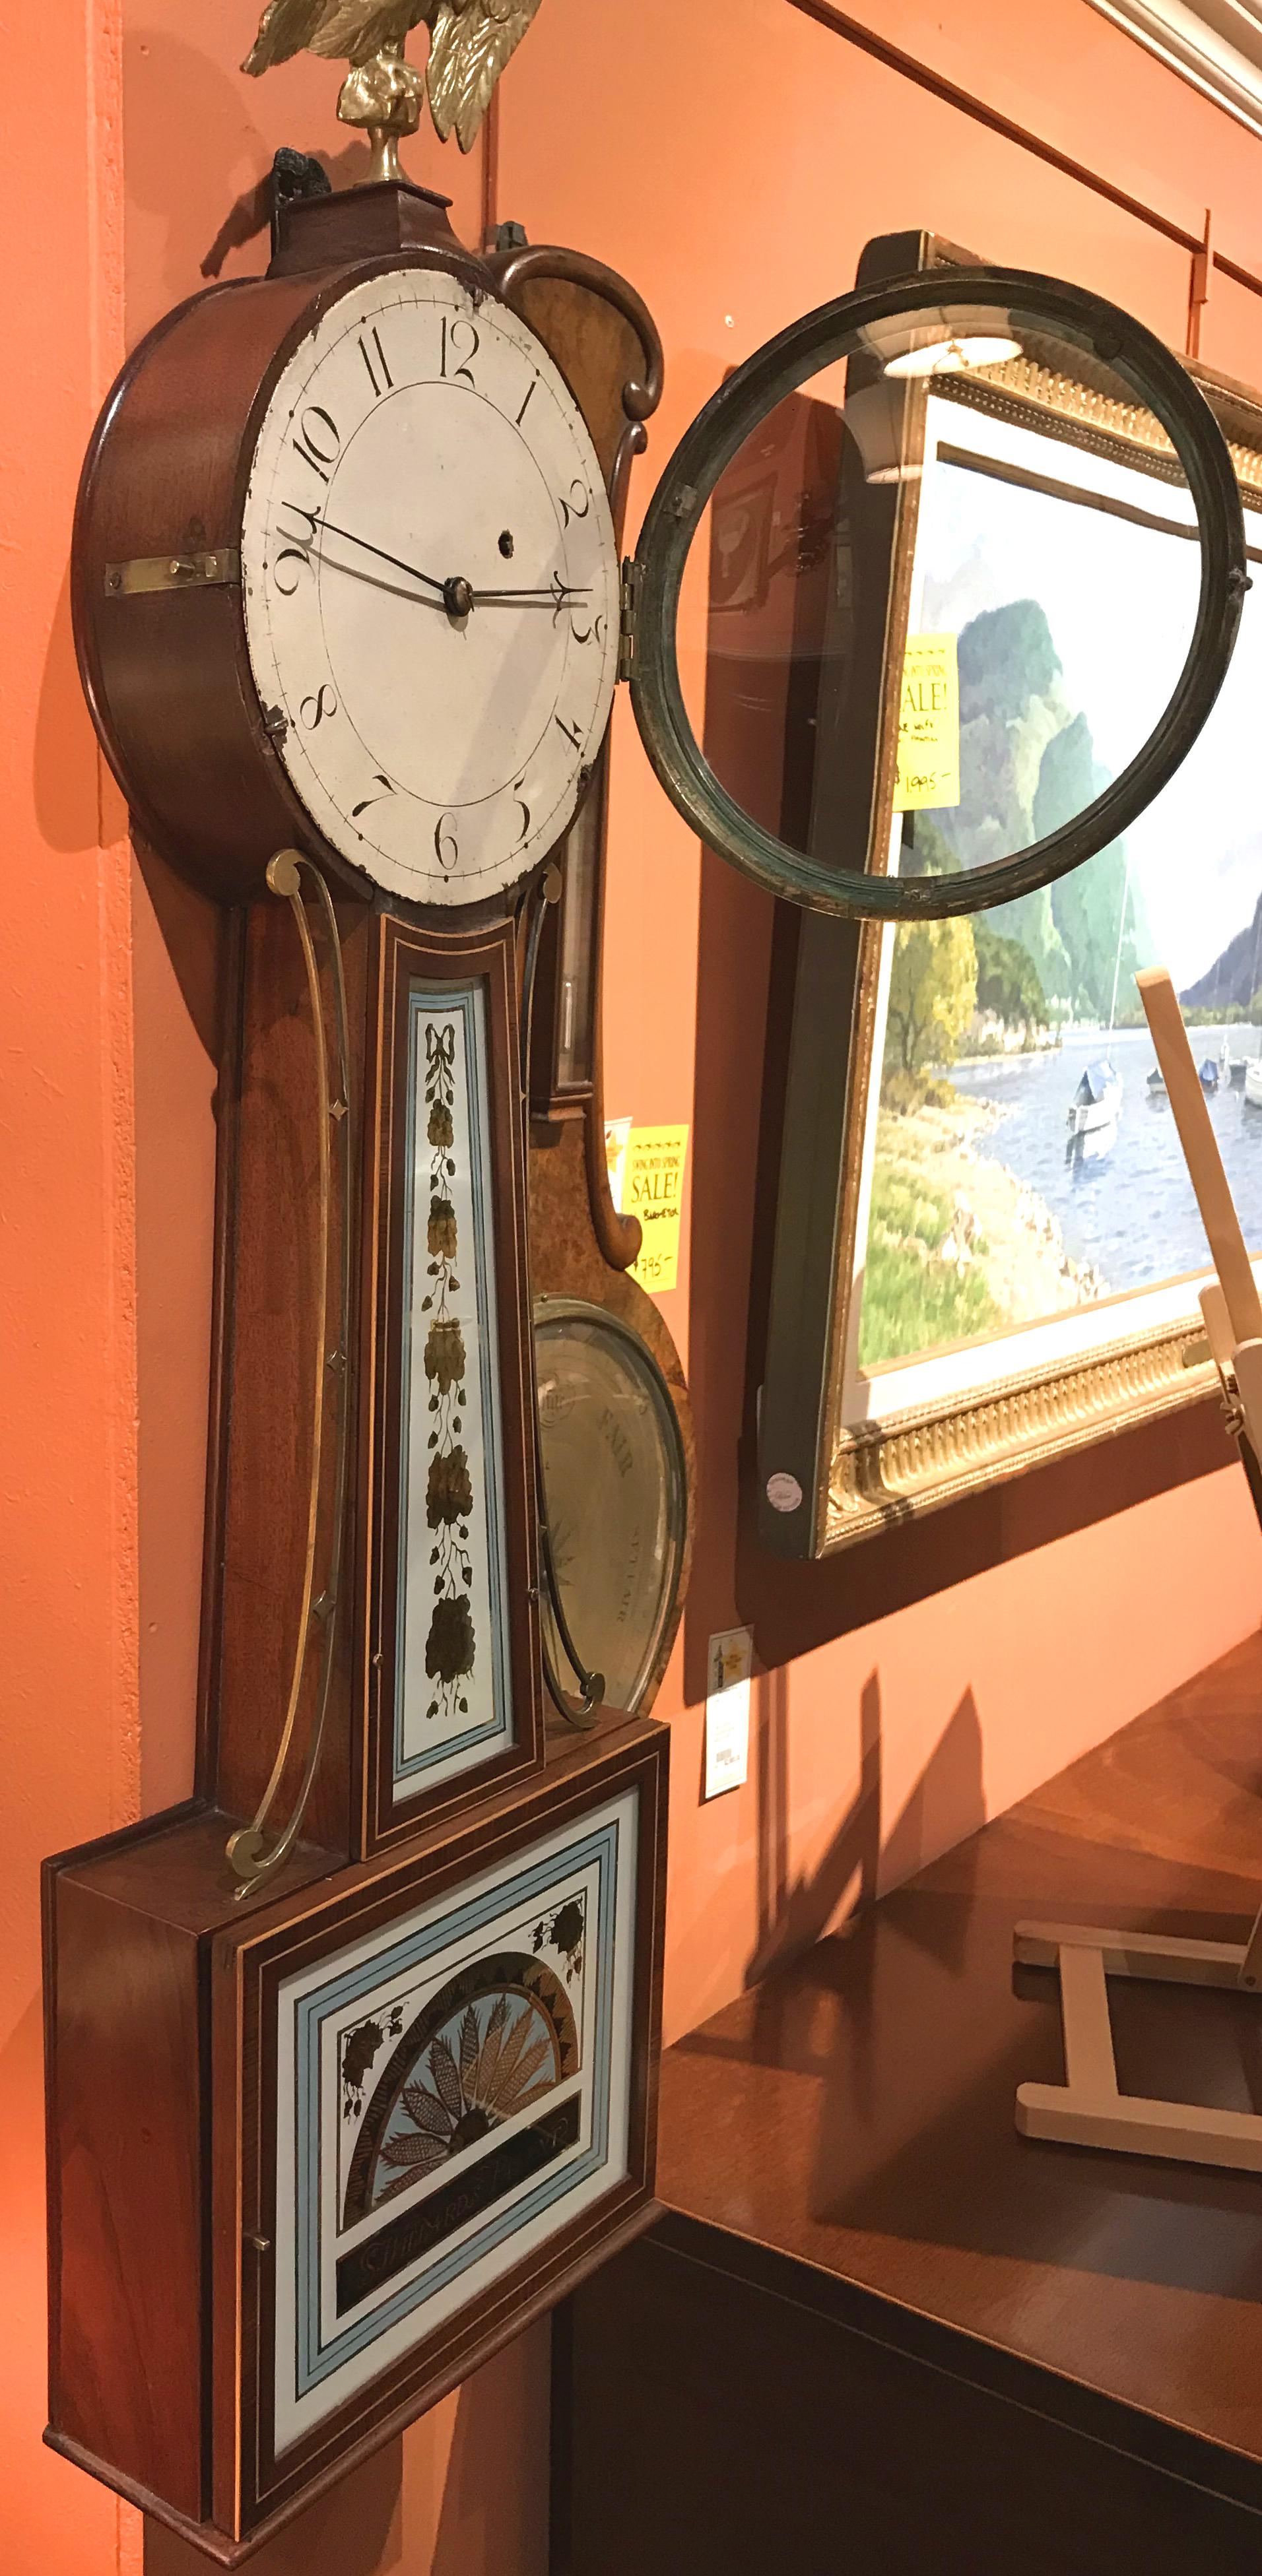 American Simon Willard Patent Timepiece Banjo Clock with T Bridge Movement